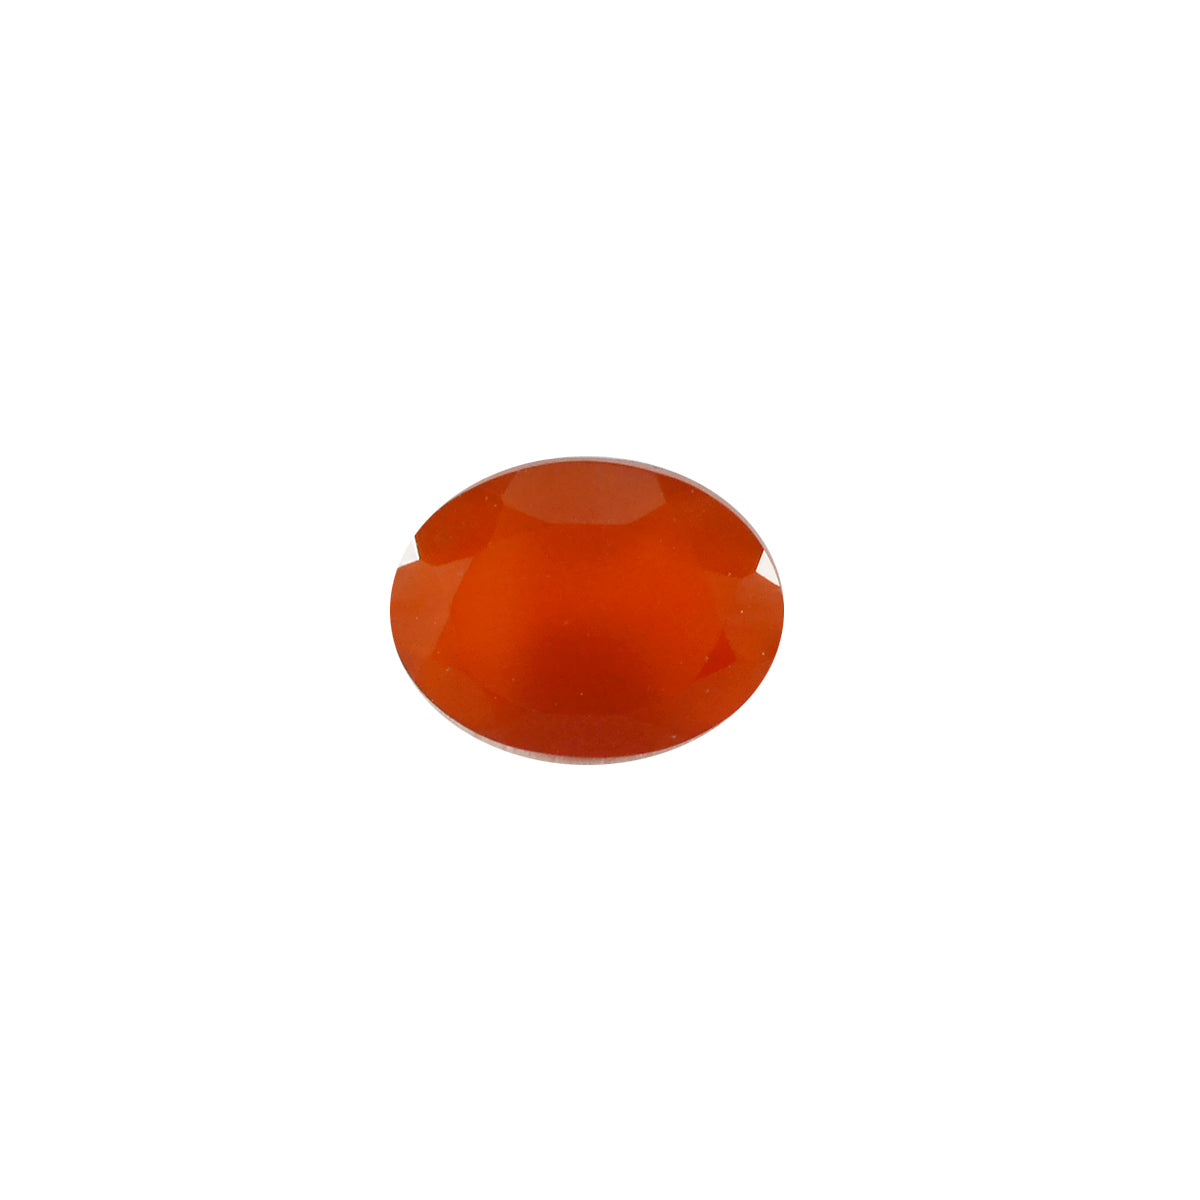 Riyogems 1PC Genuine Red Onyx Faceted 12x16 mm Oval Shape startling Quality Loose Gem